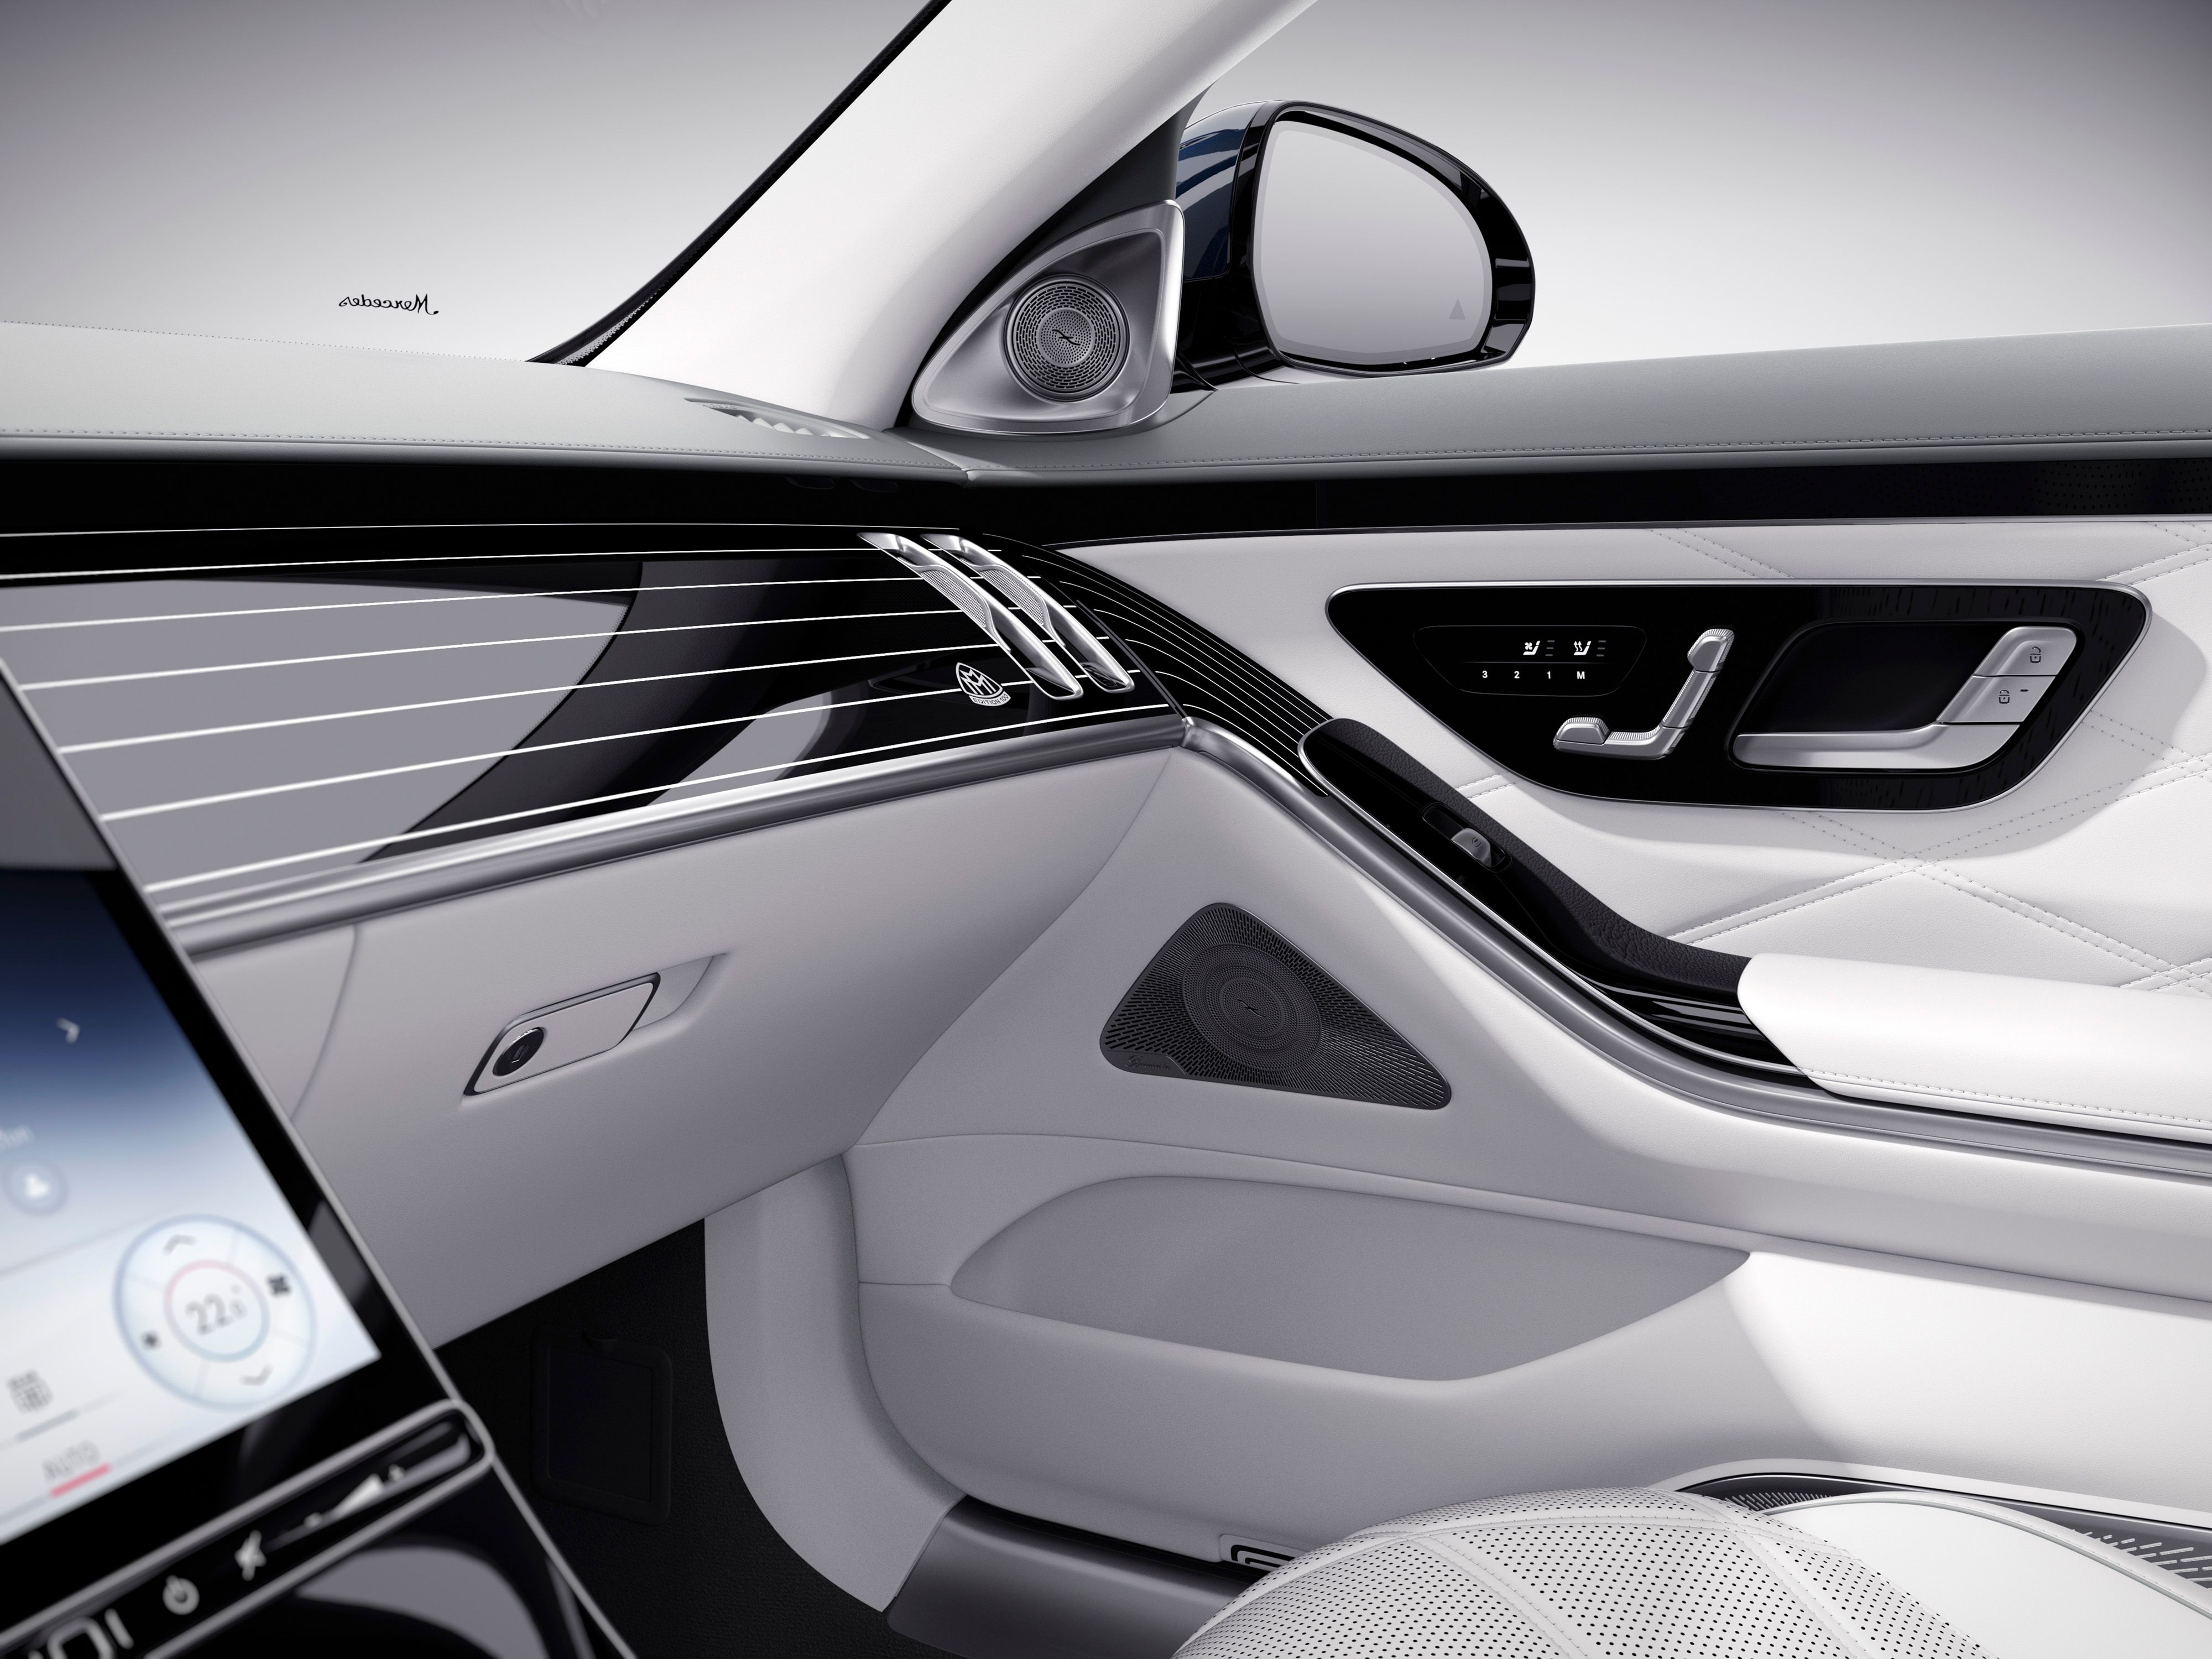 2022 Mercedes-Maybach Edition 100